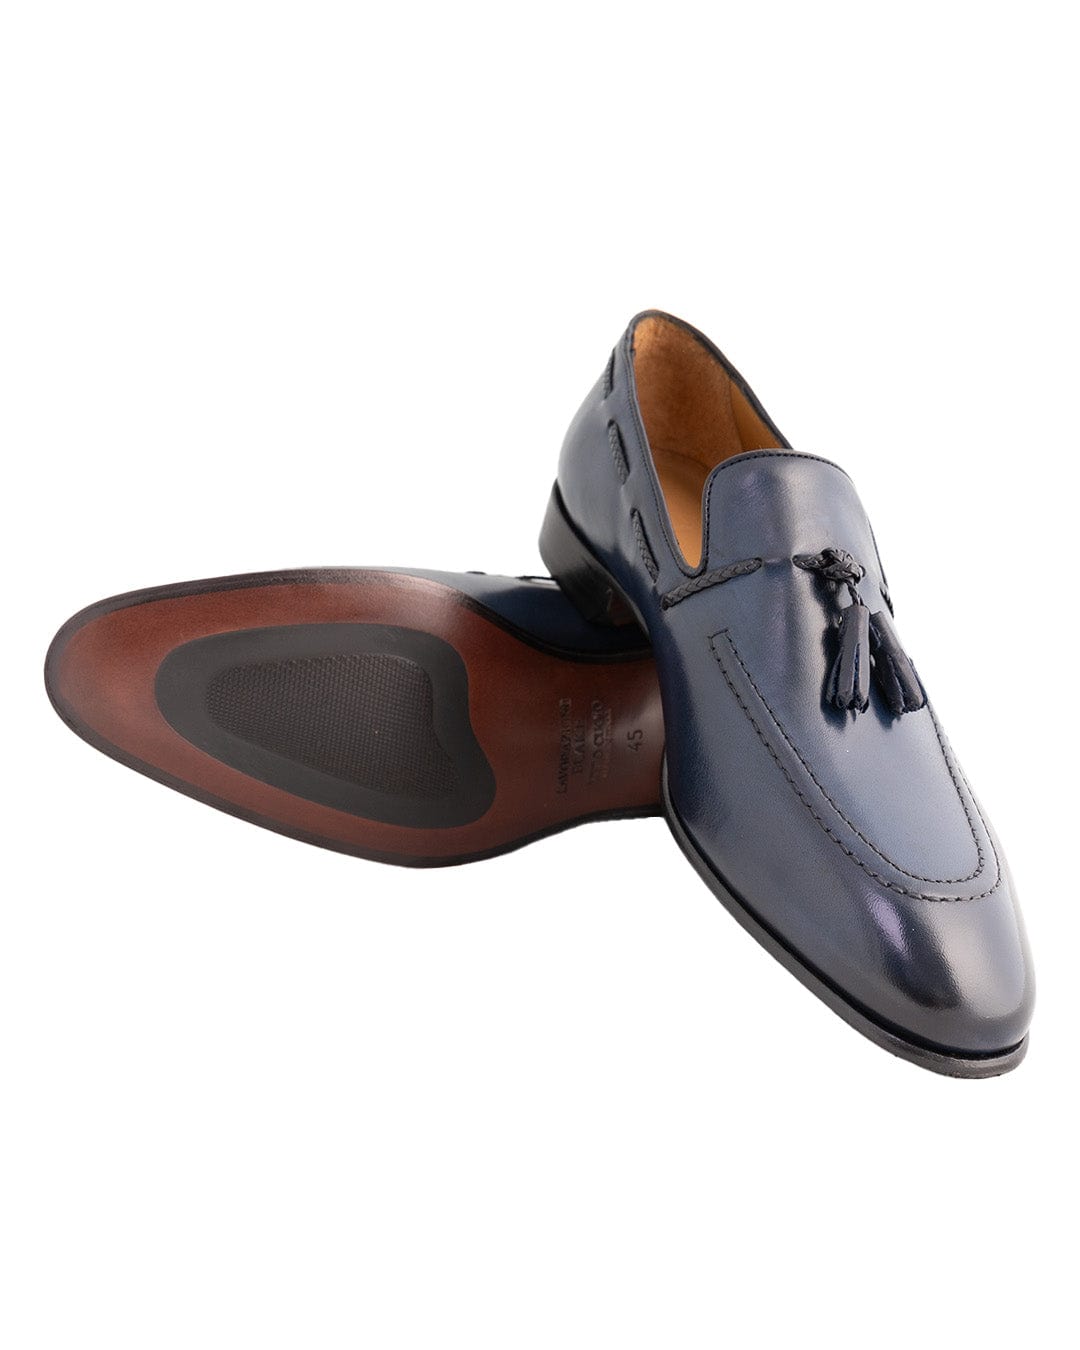 Gagliardi Shoes Gagliardi Navy Made In Italy Tassle Loafers